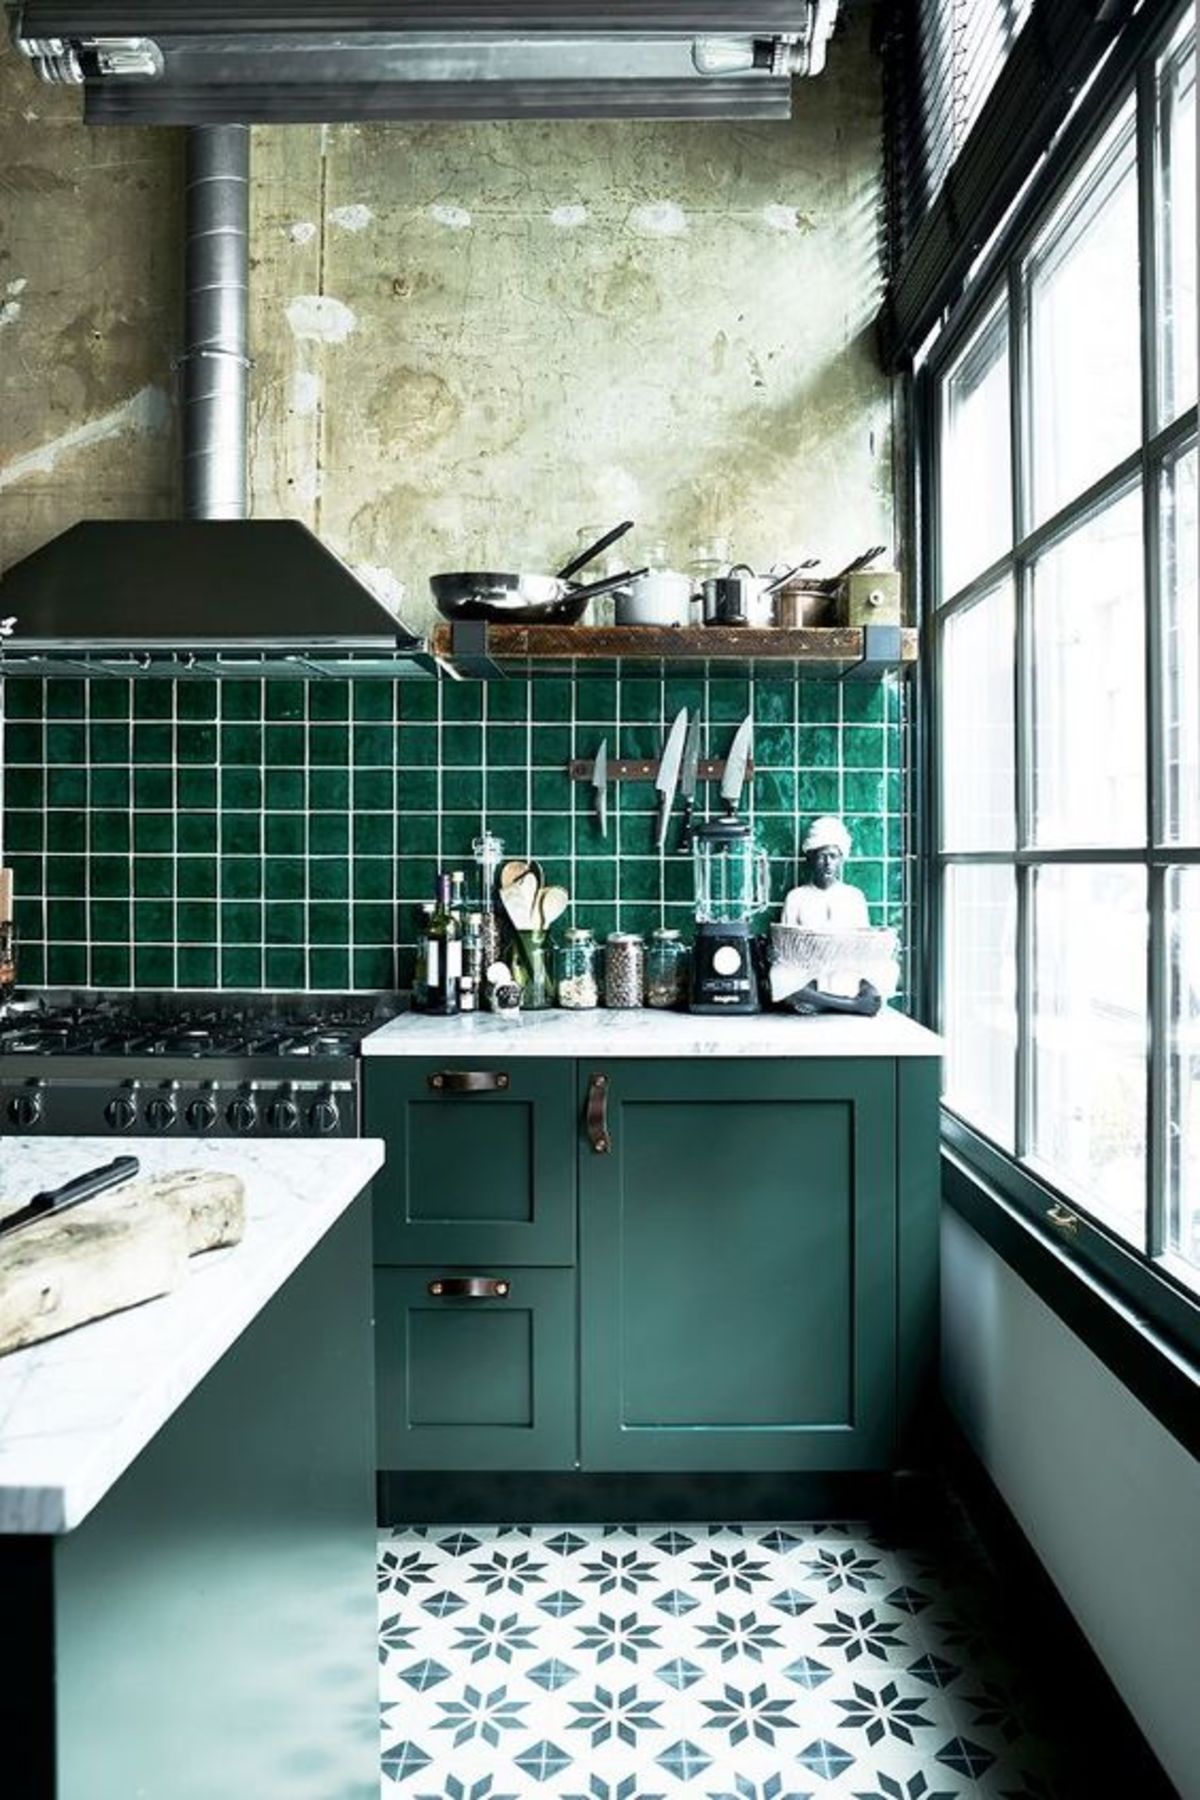 All green industrial kitchen